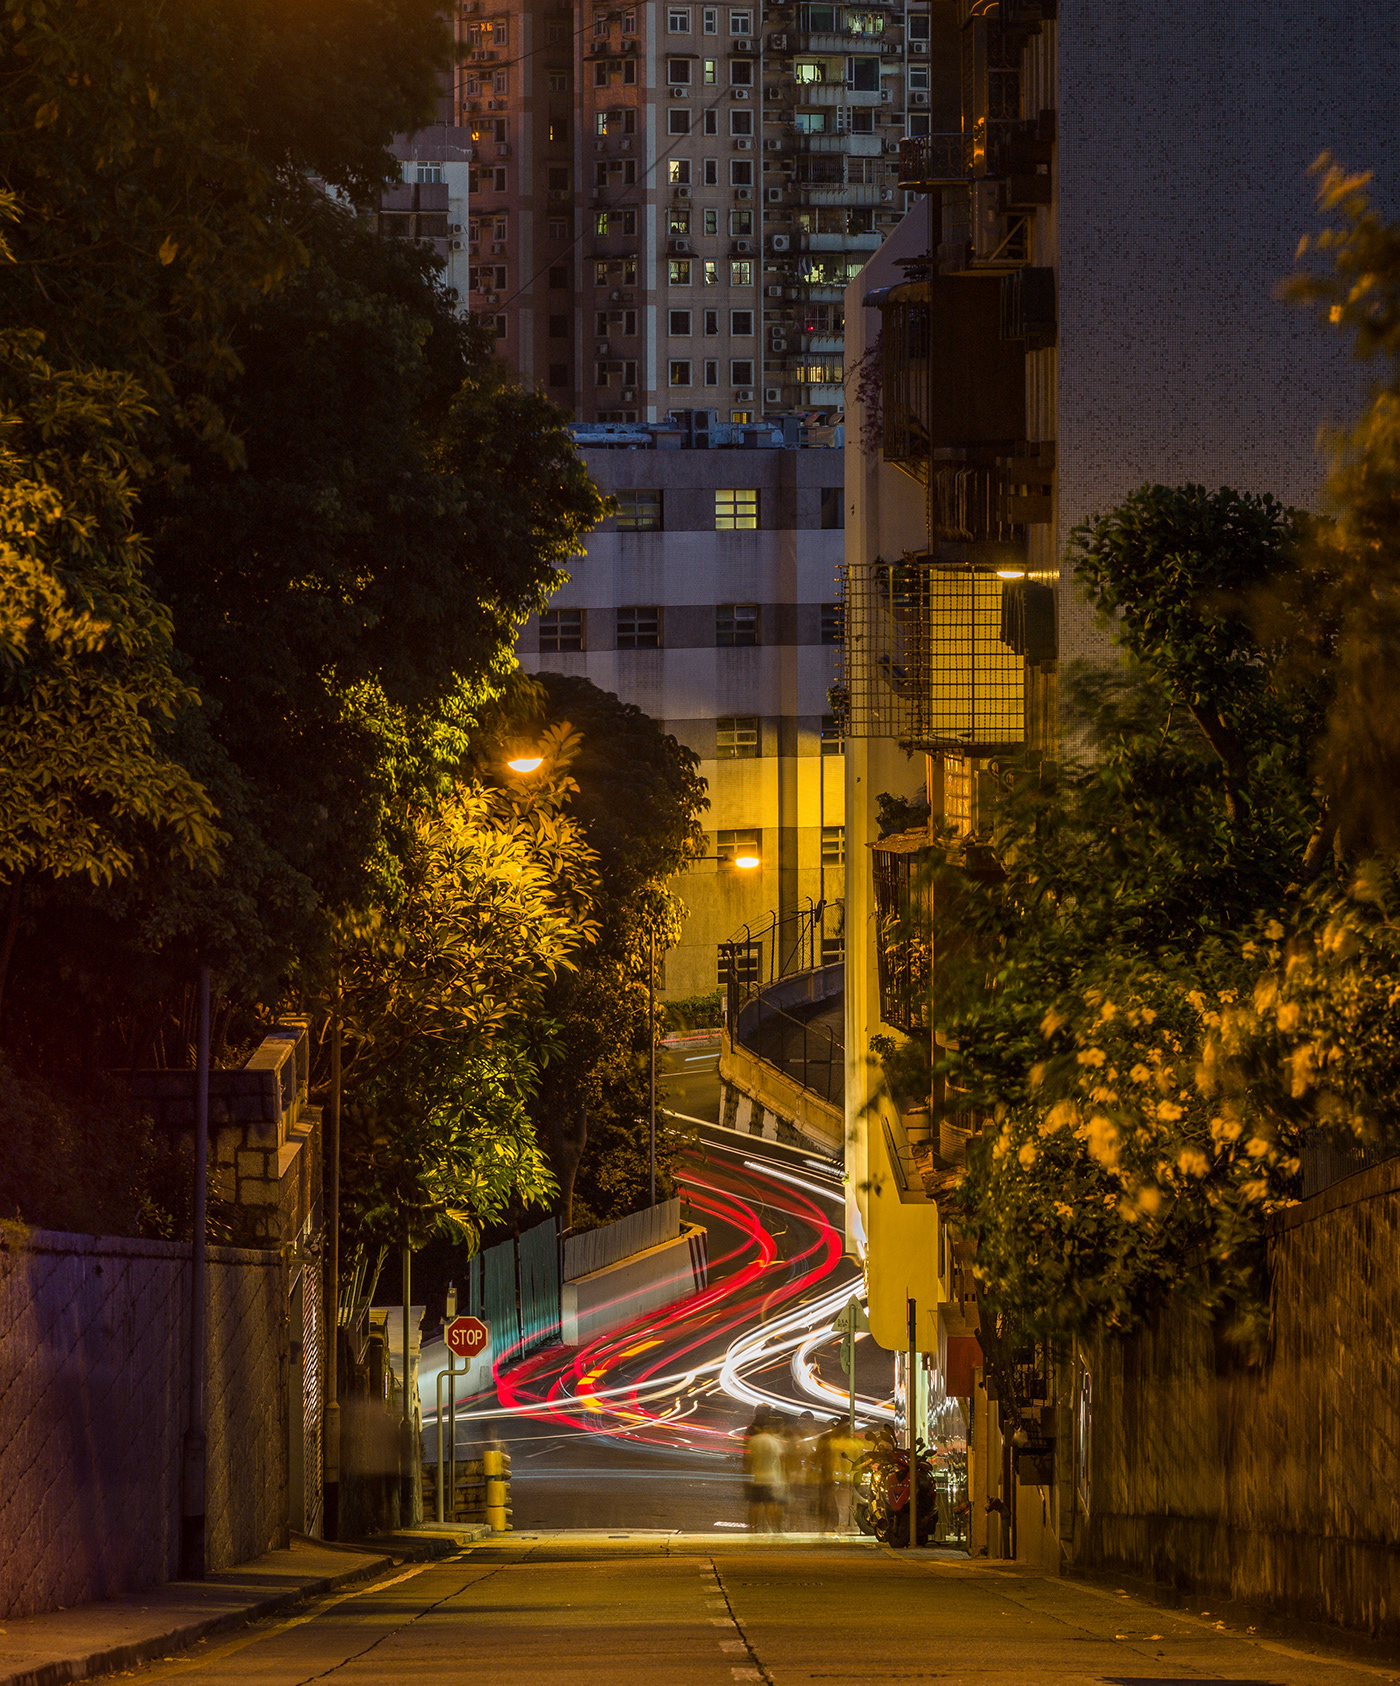 Street Street Phototgraphy Photography  Urban urbex urban exploration